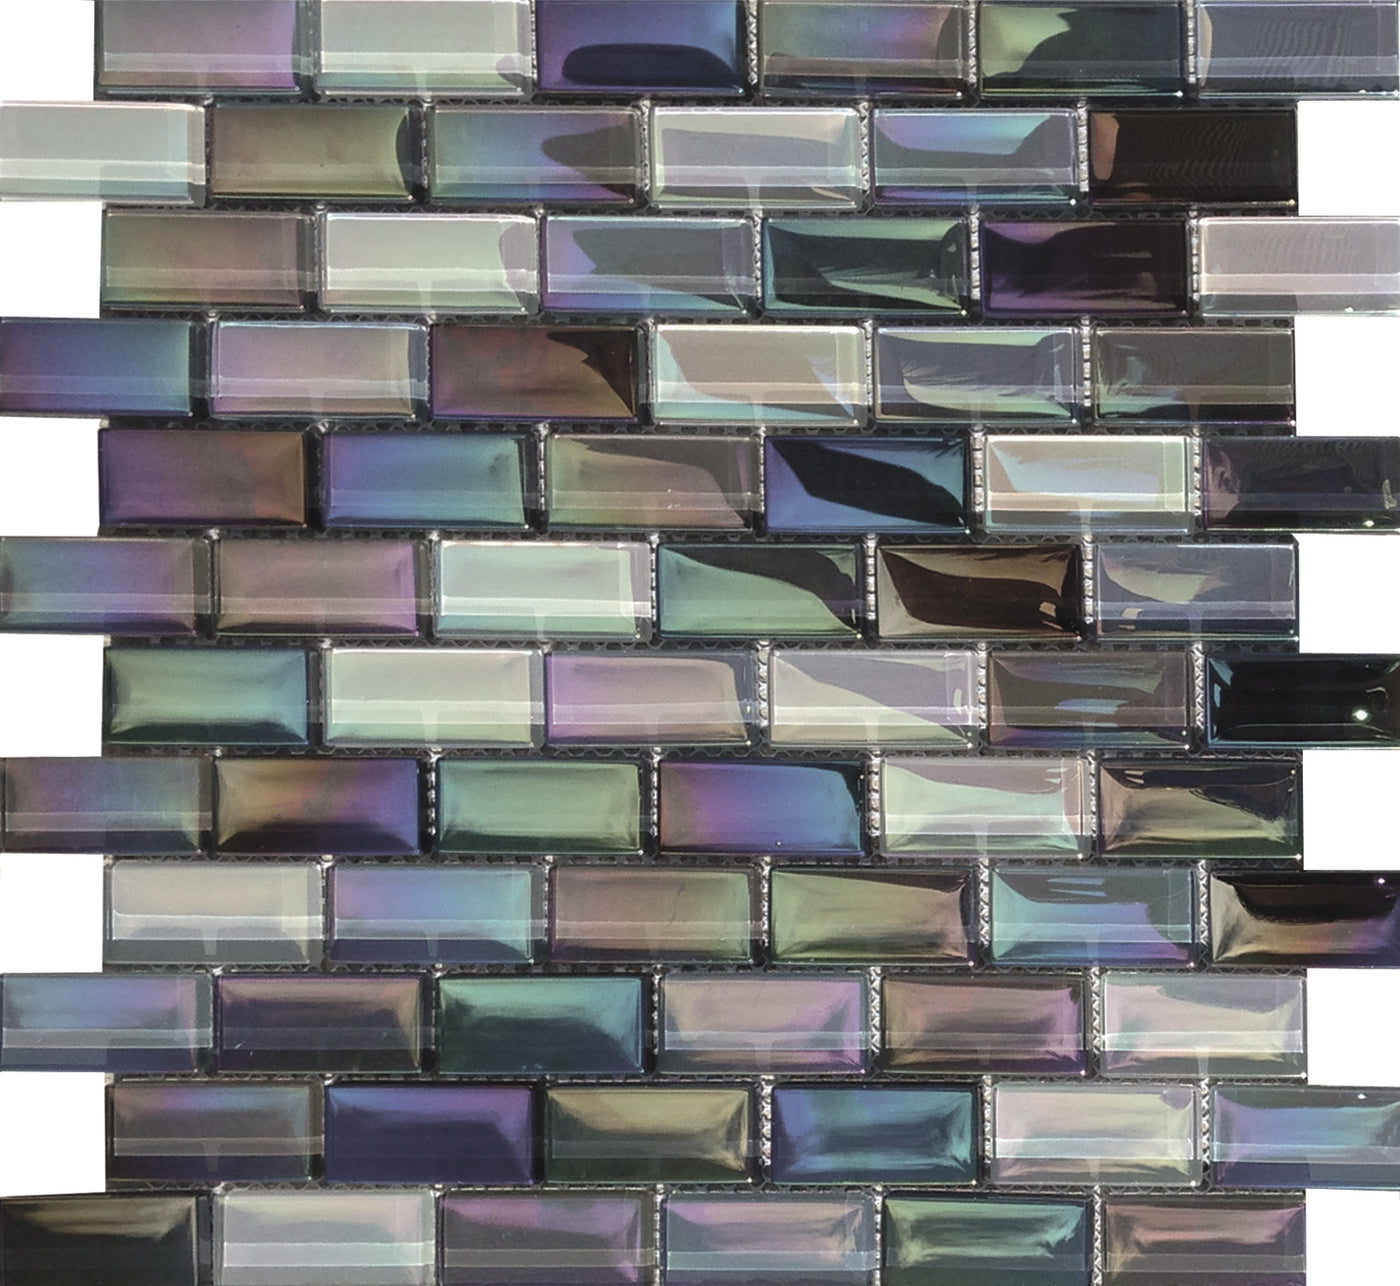 QDI Surfaces Luxe Aqua 1 x 2 12" x 12" Glass Mosaic